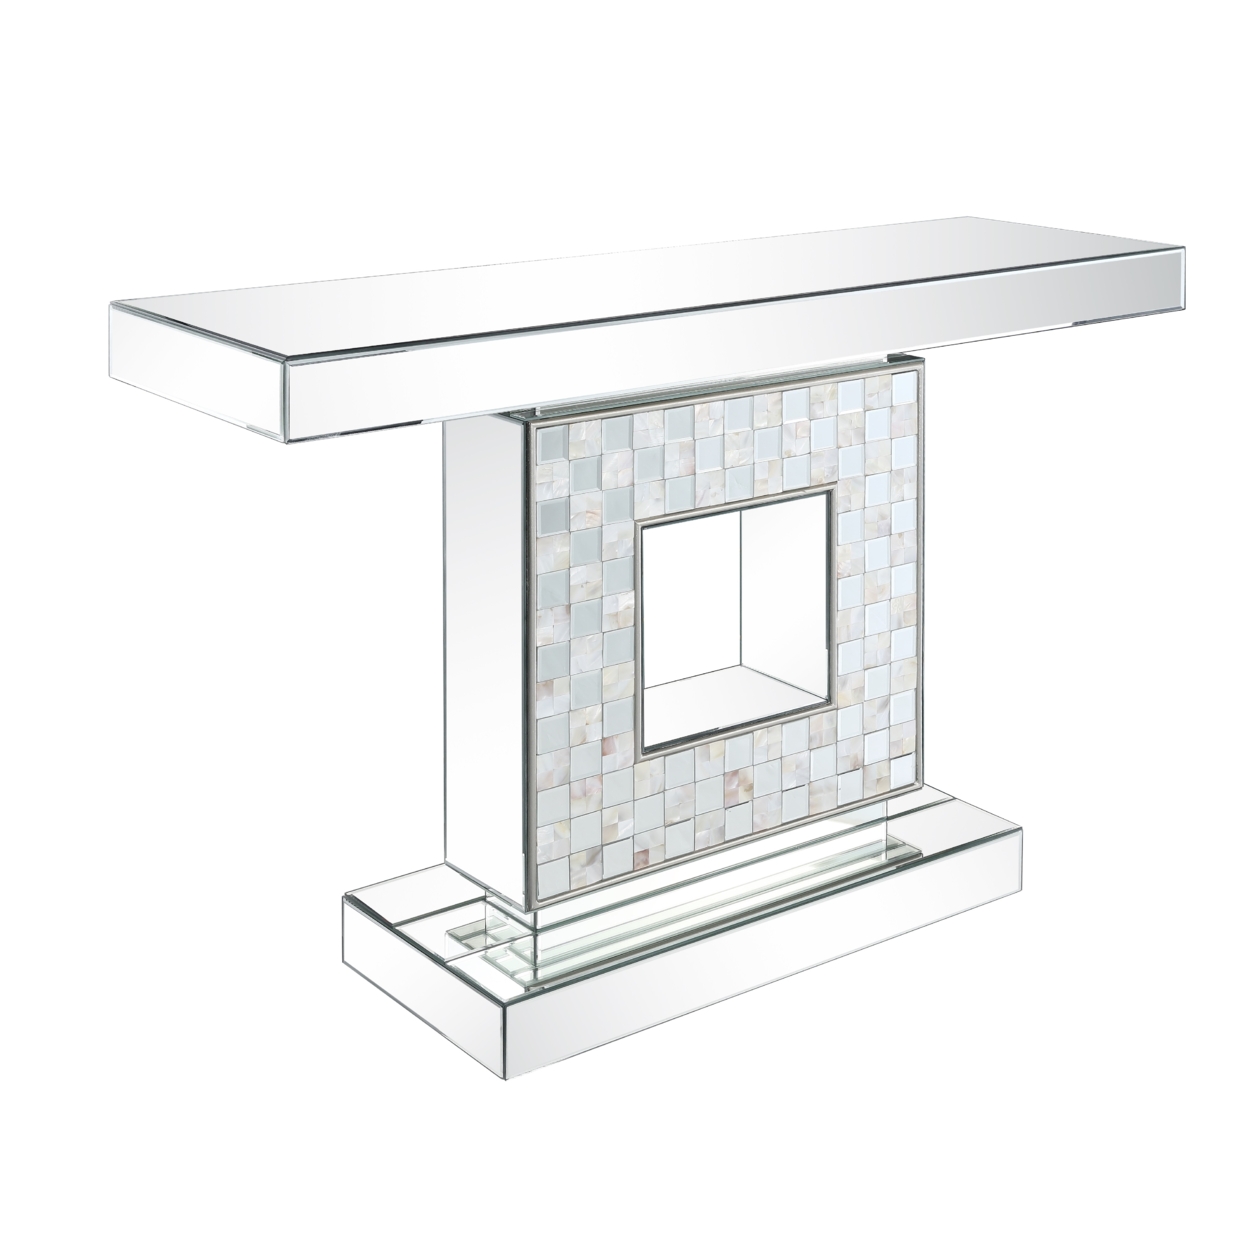 Contemporary Style Mirror Console Table With Square Base Design, Silver- Saltoro Sherpi